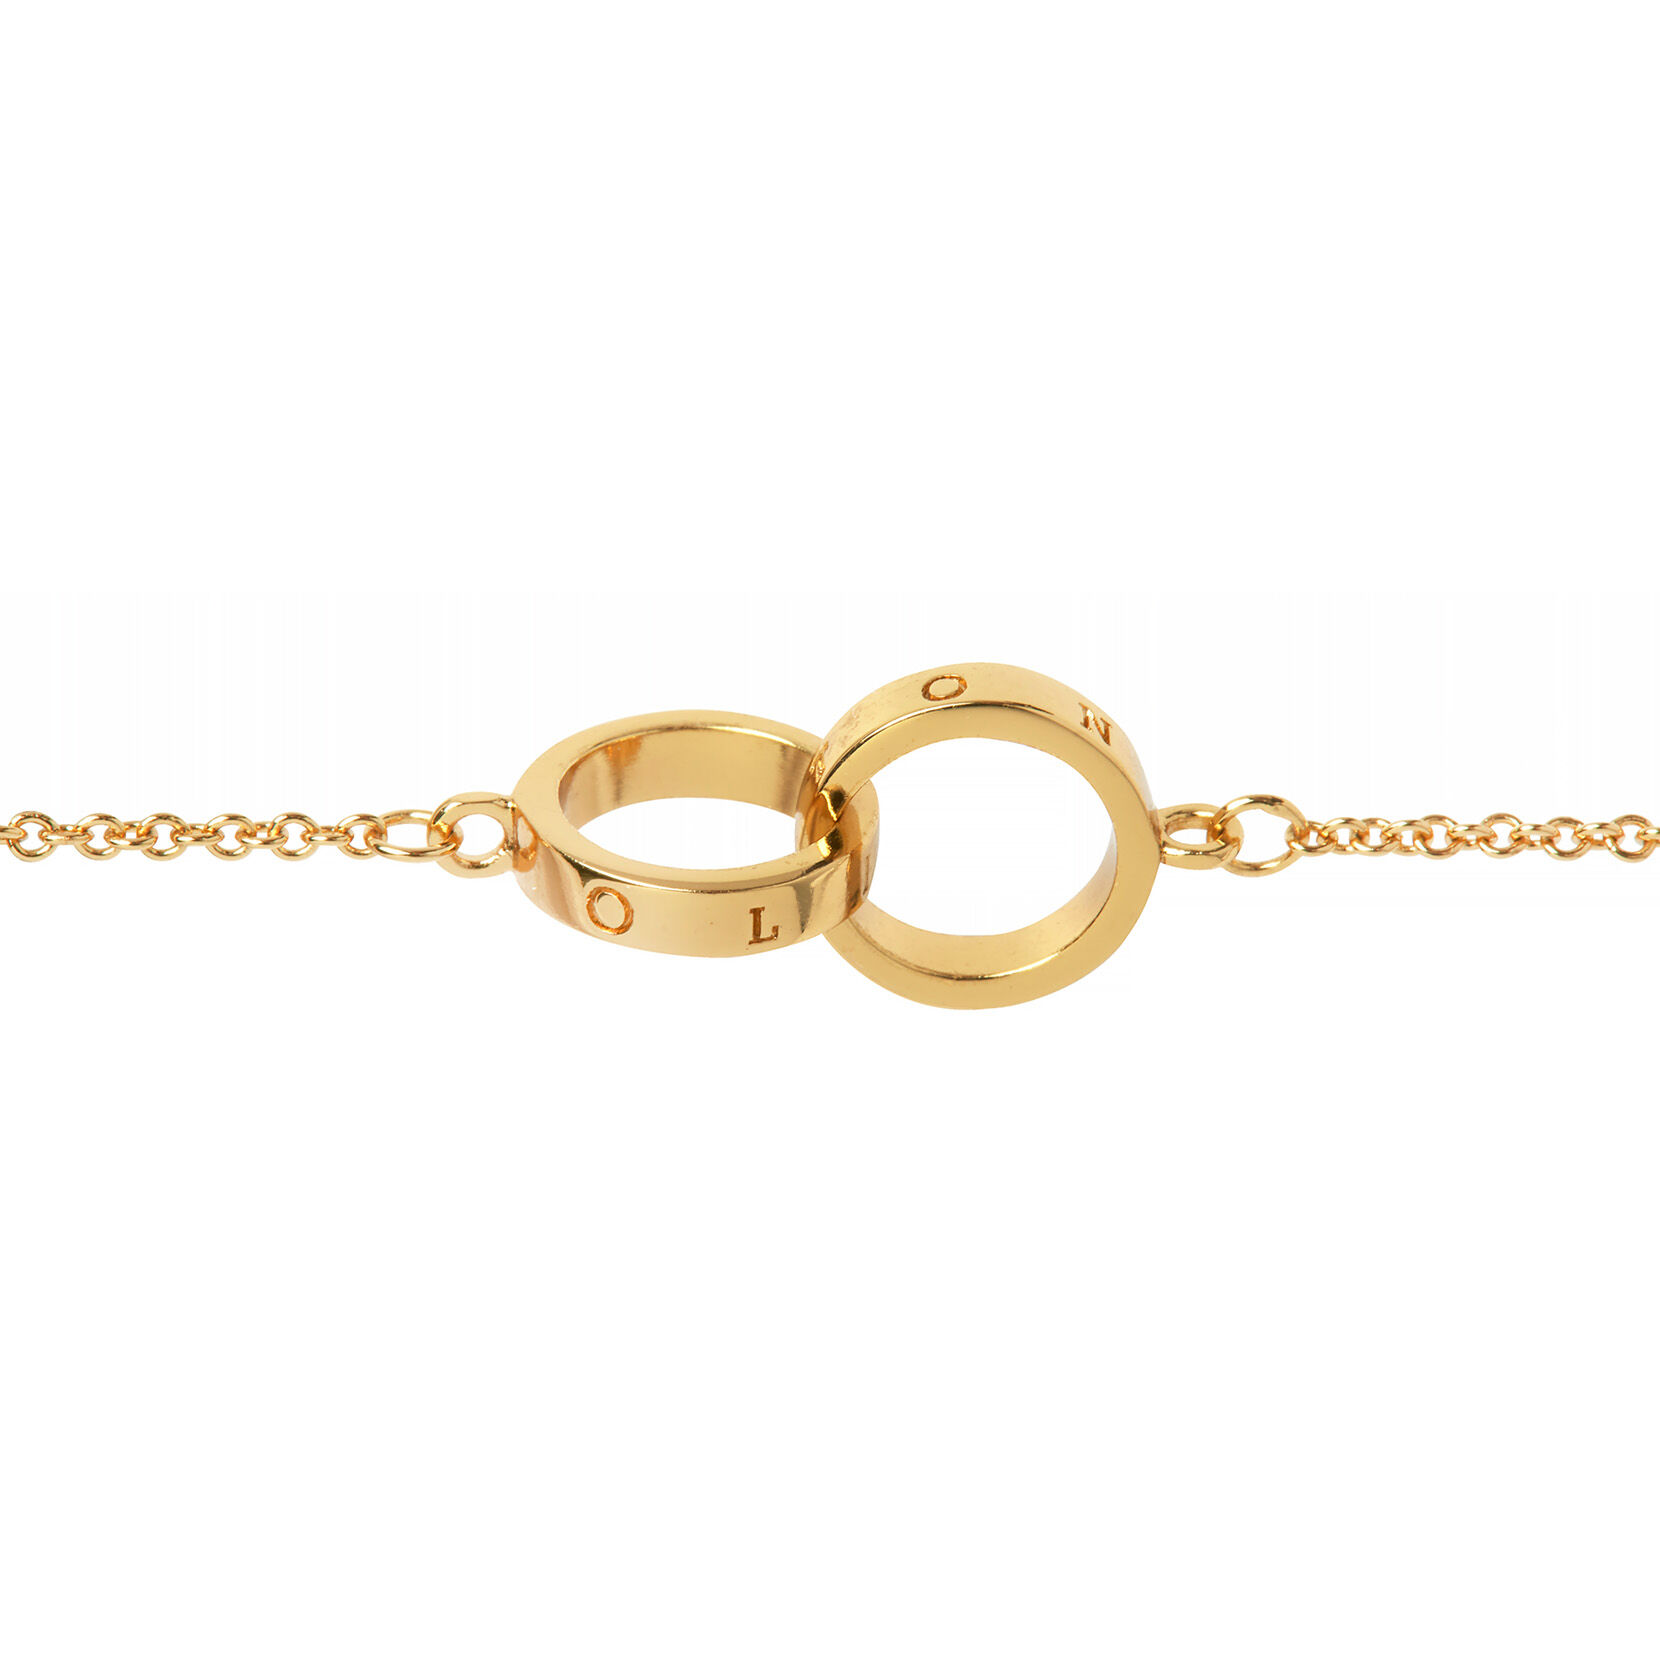 23mm White & Gold Mesh Watch & Interlink & Pearl Bracelet Gift Set